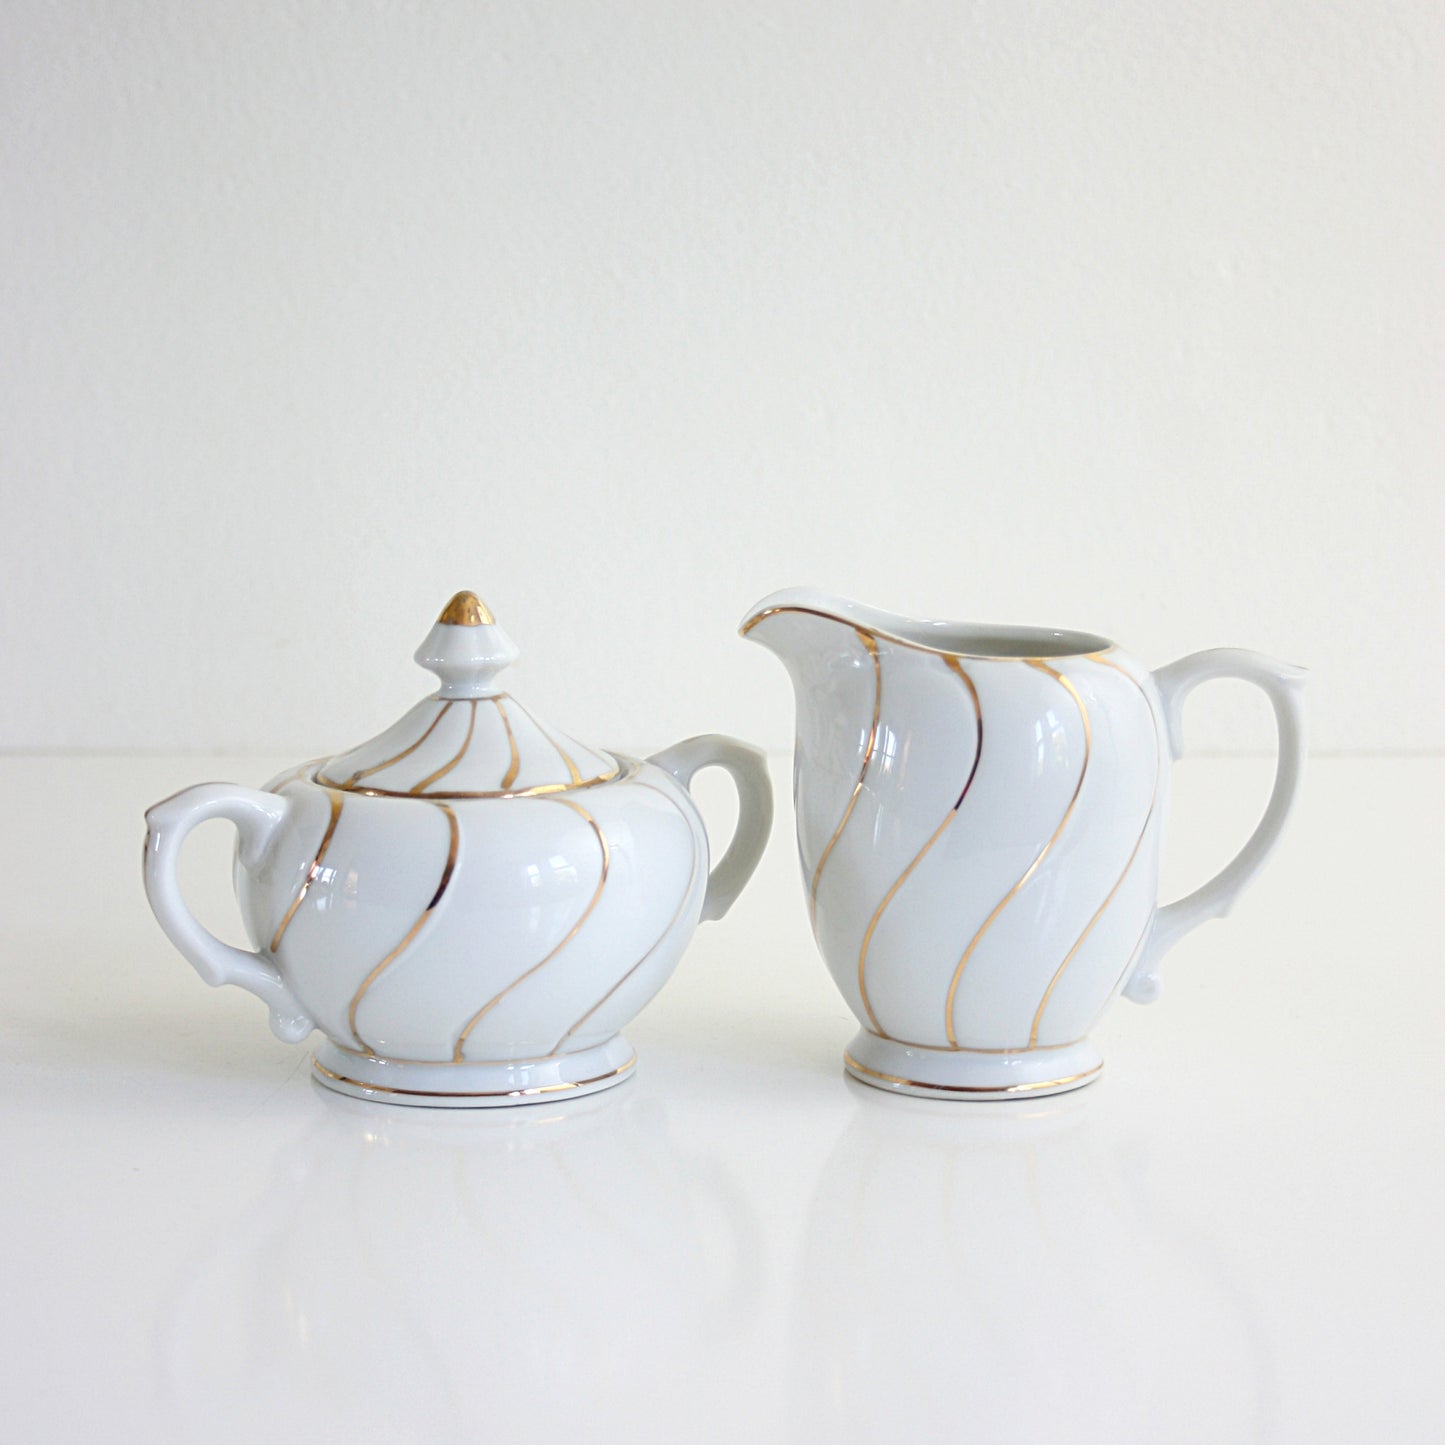 SOLD - Vintage White and Gold Porcelain Tea Set / Mid Century Tea Service from Japan